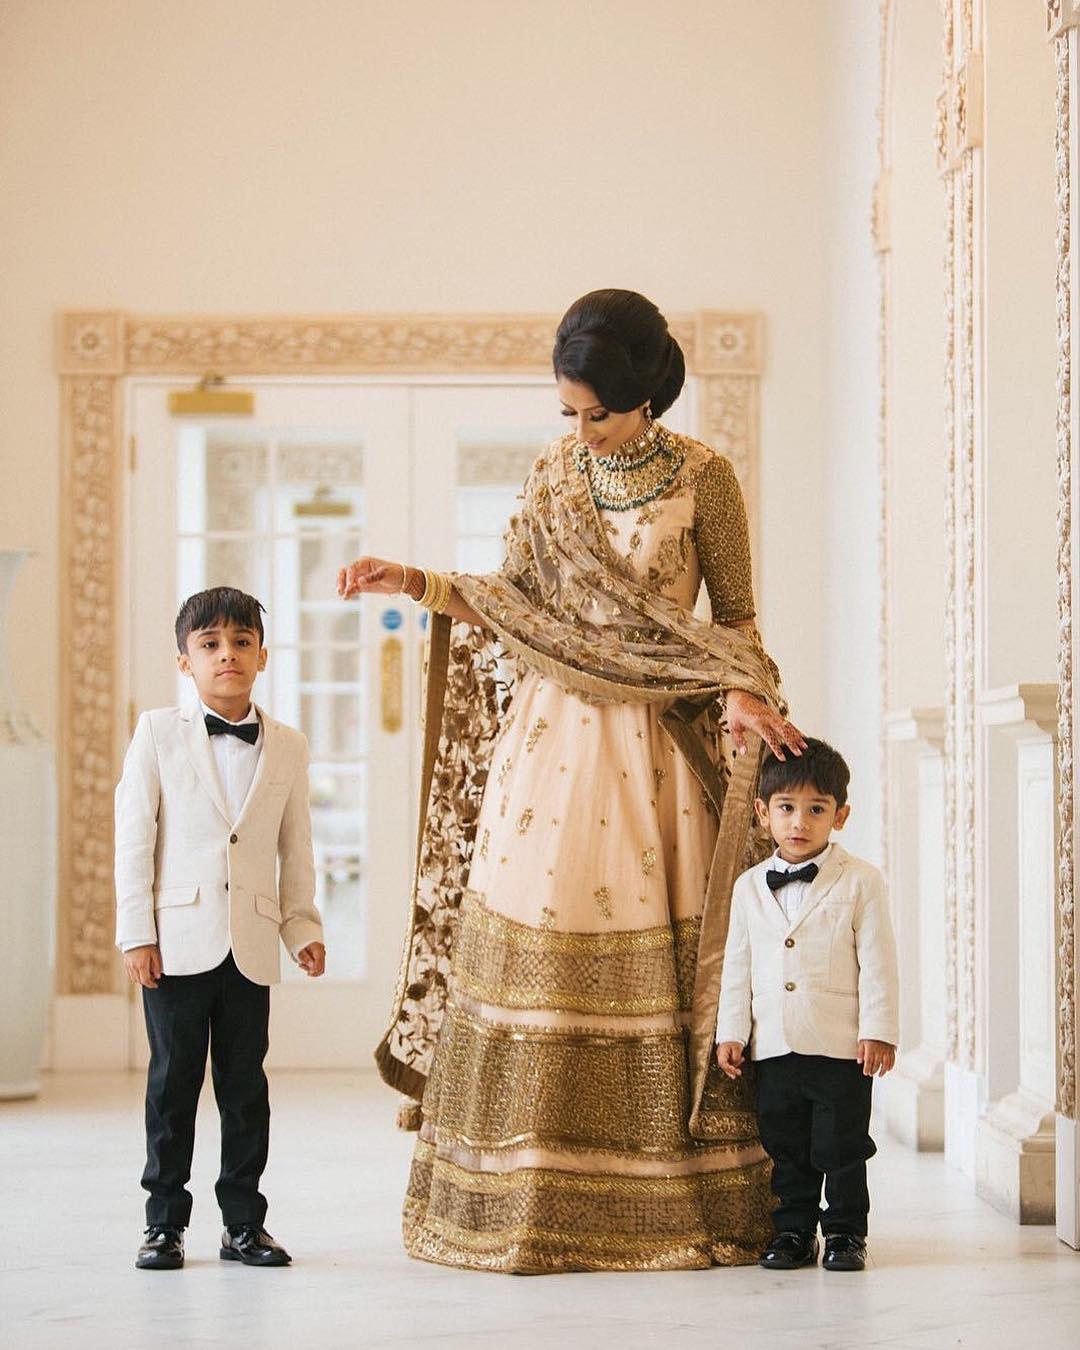 pakistani wedding dresses for men